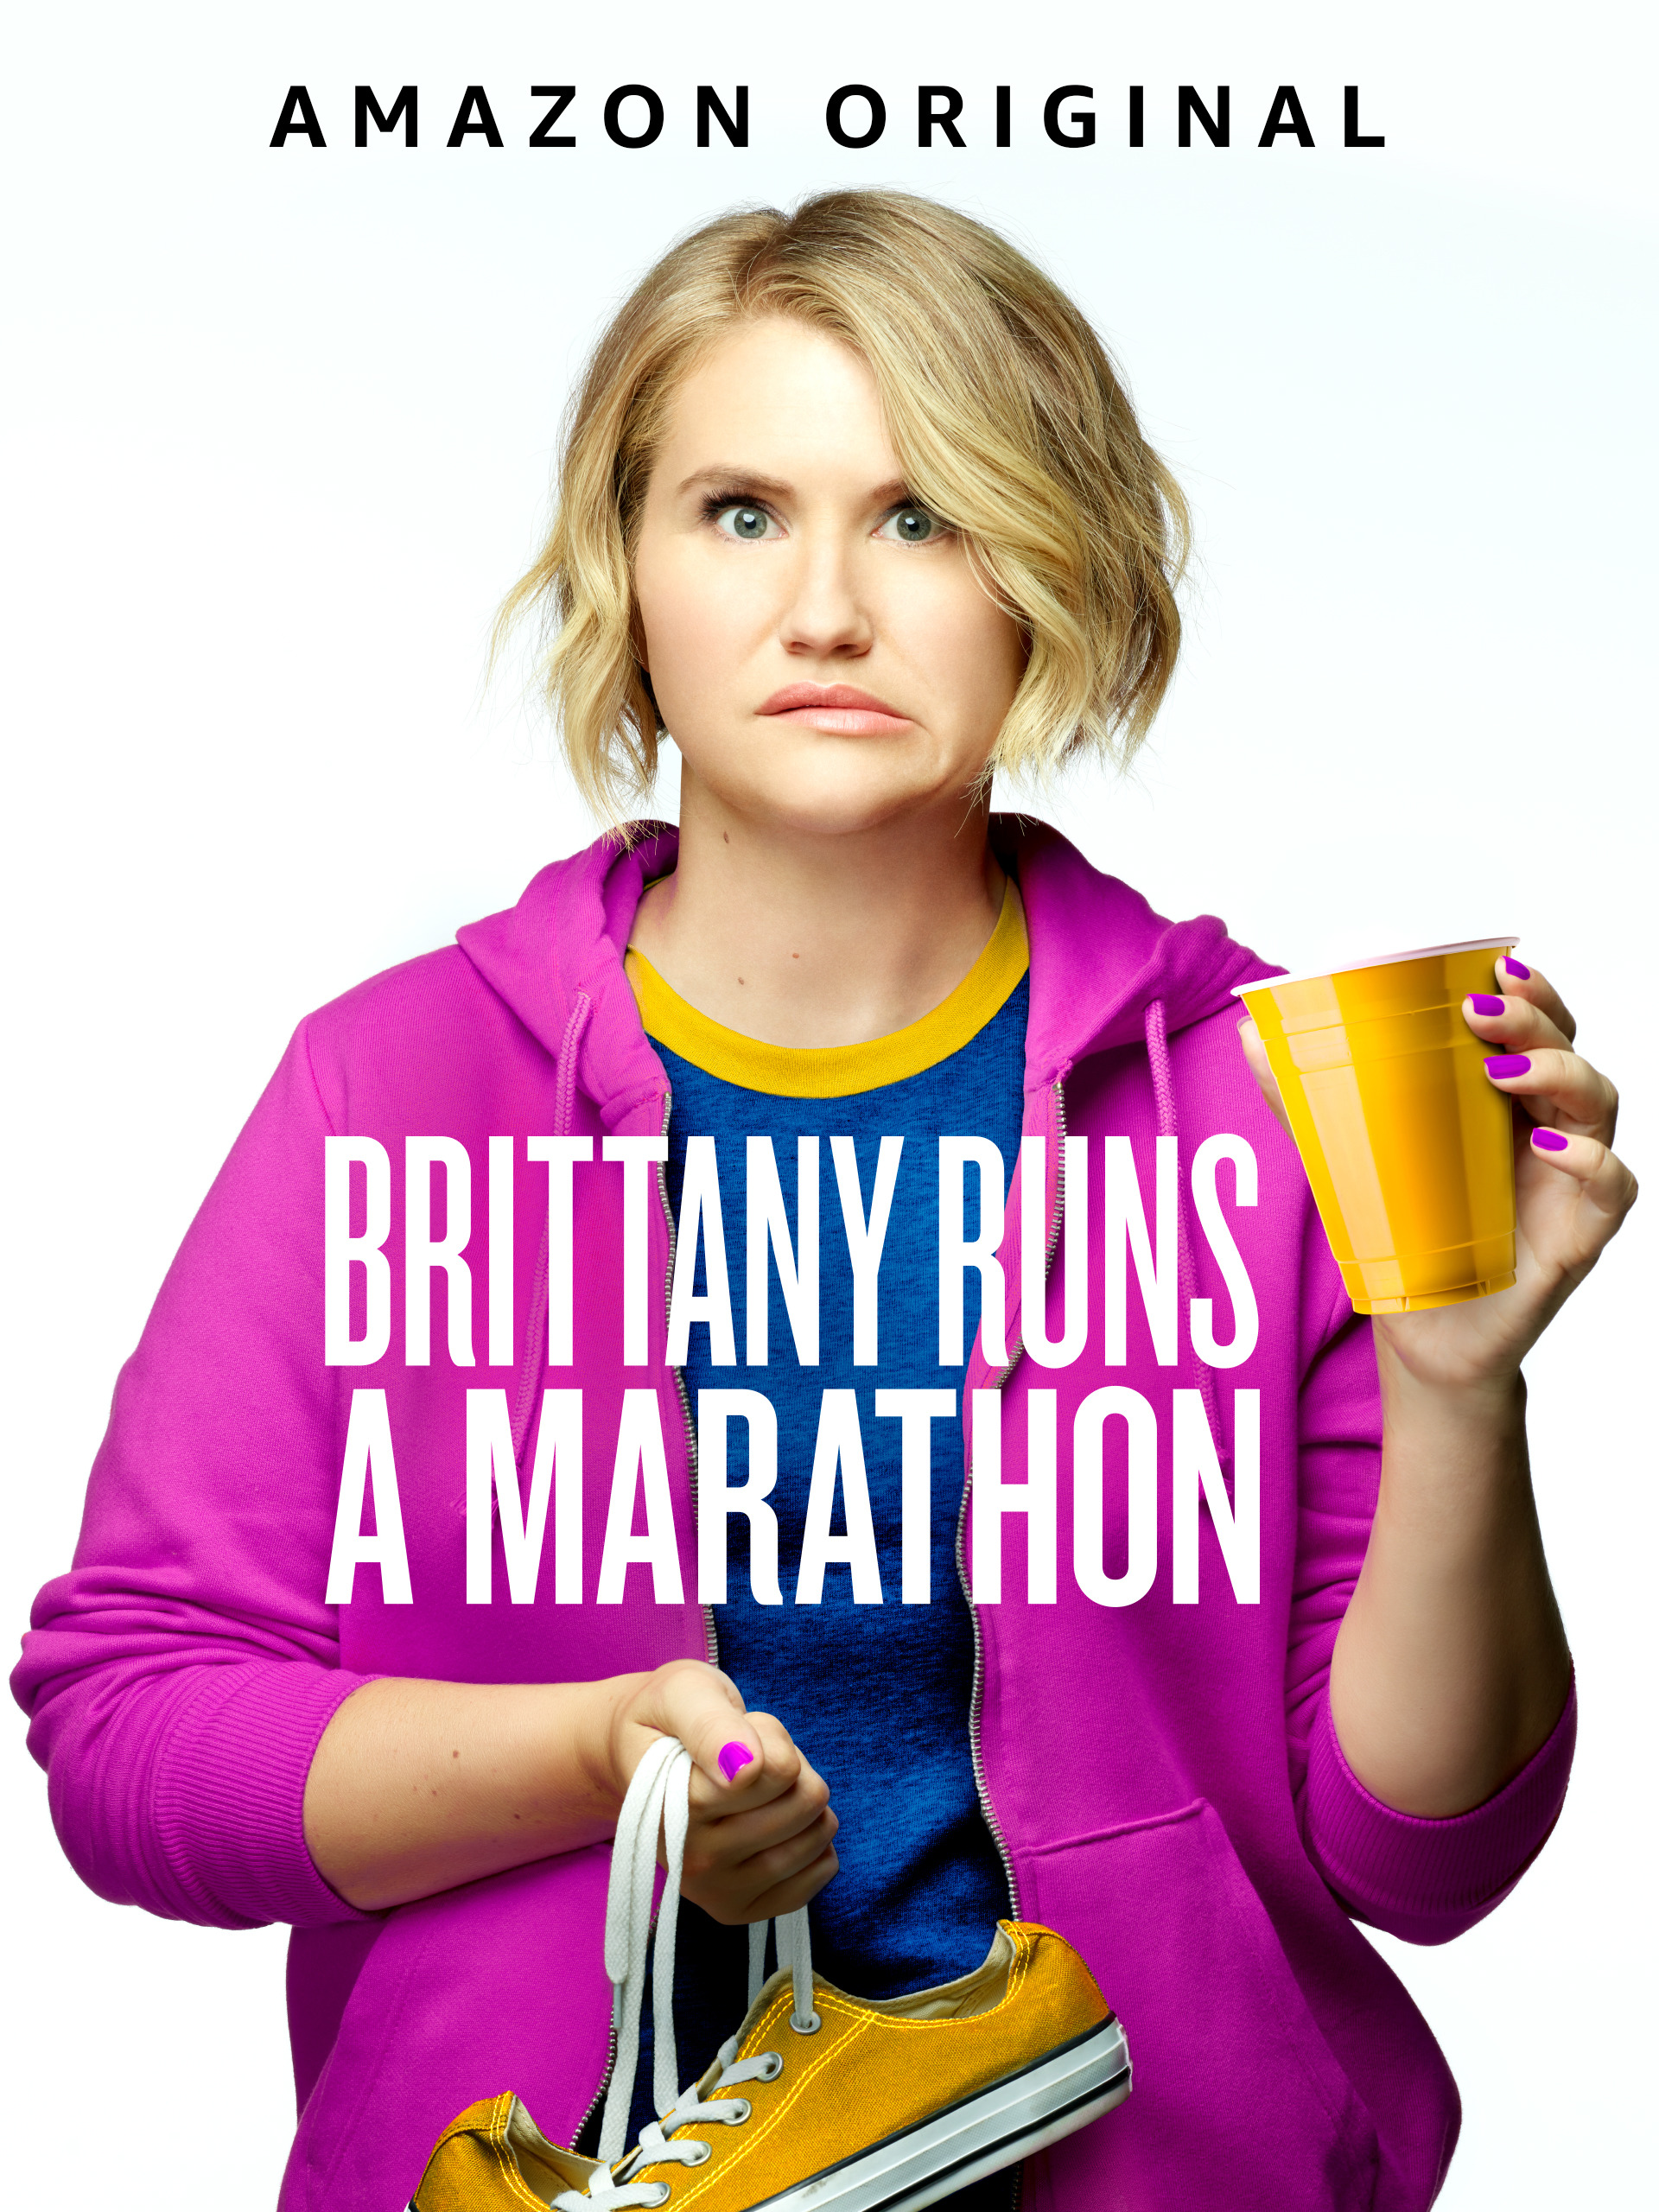 Brittany Runs a Marathon (2019) บริตตานีวิ่งมาราธอน